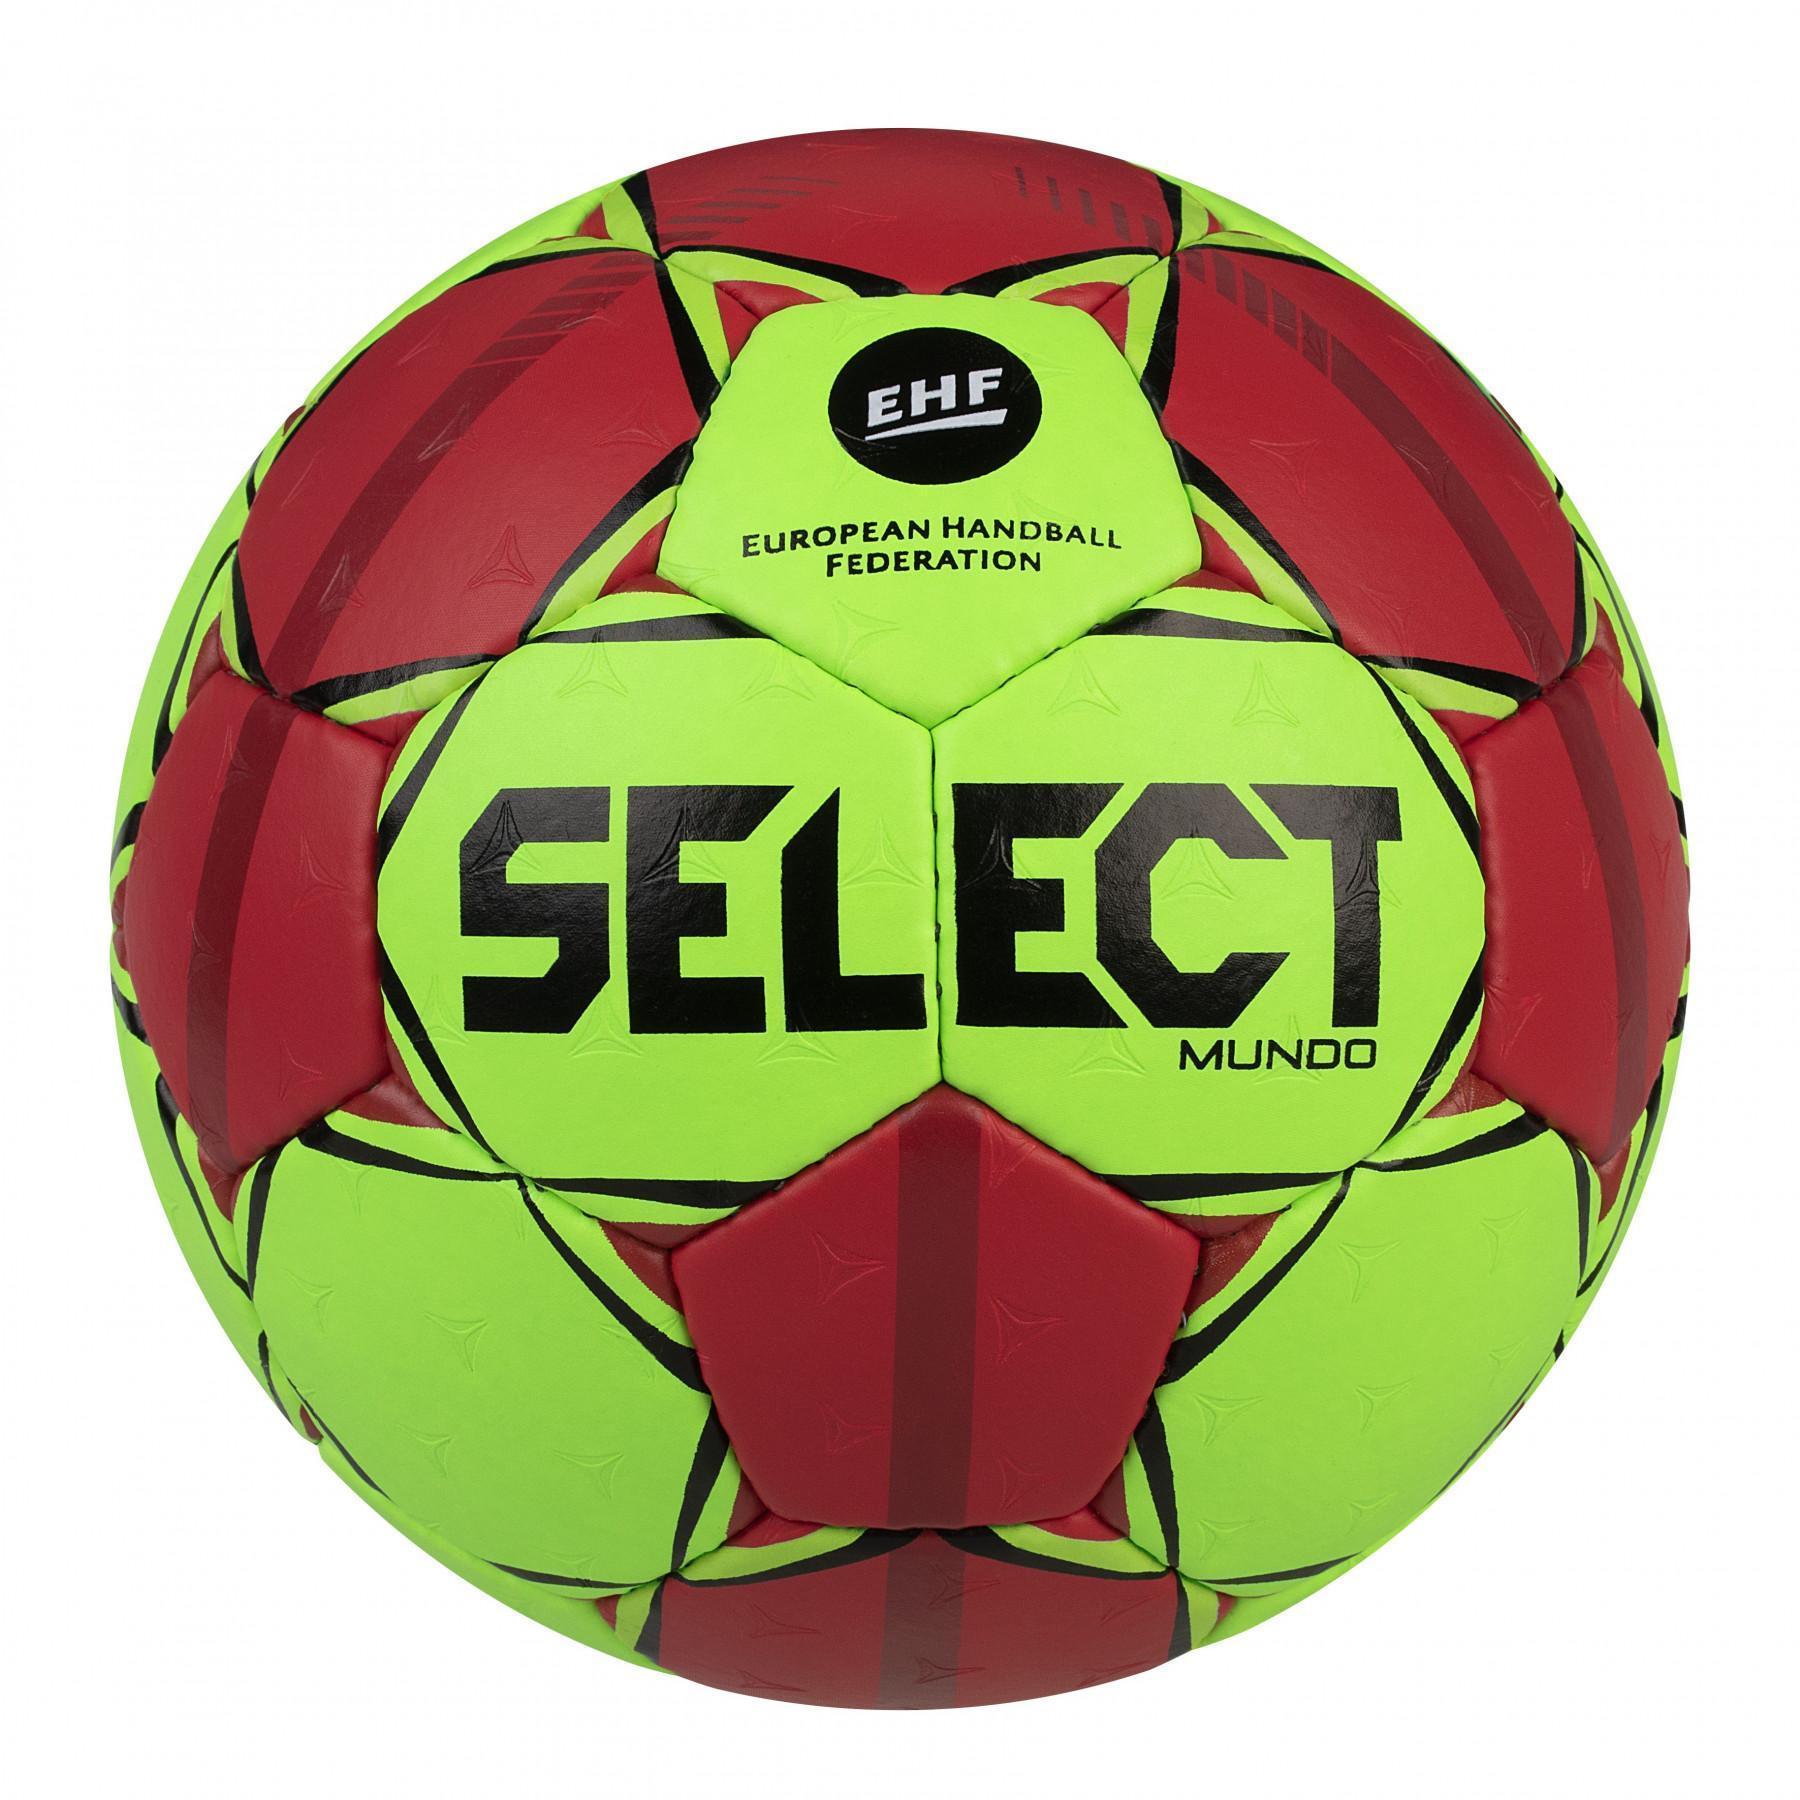 Balon Select Mundo v20/22